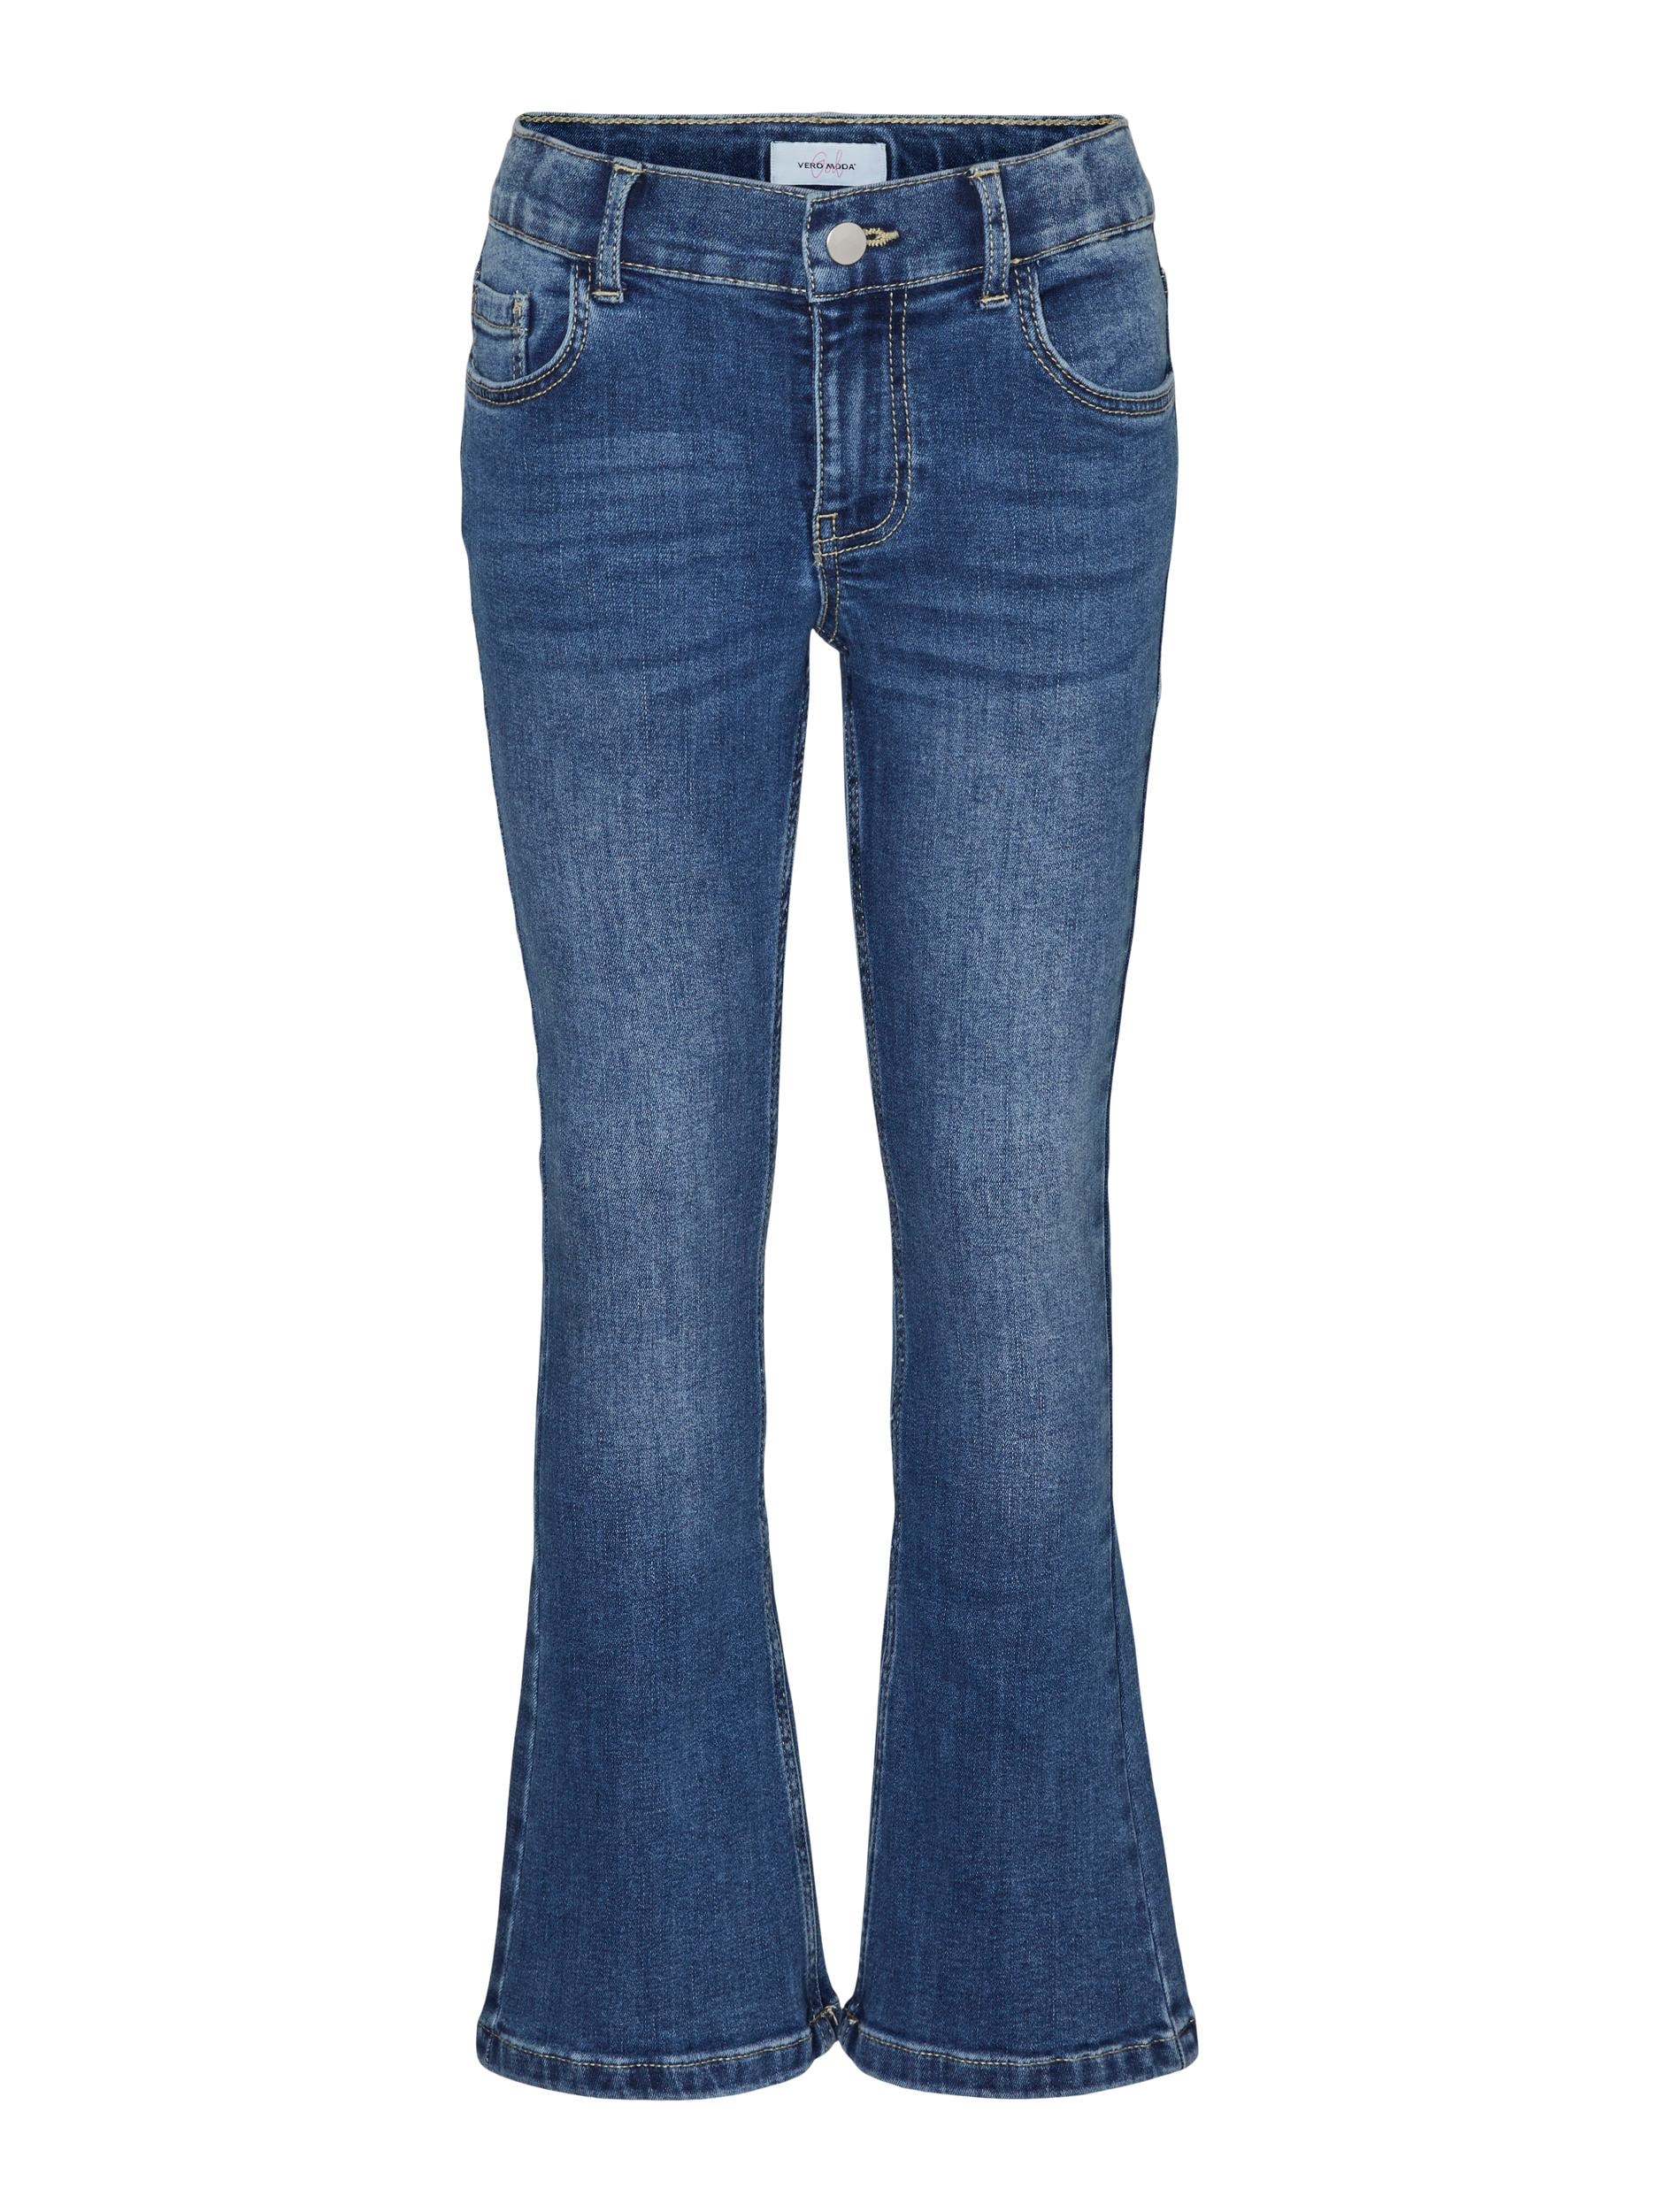 Vero Moda Girl Bootcut-Jeans »VMRIVER JNS online DNM FLAR NOOS« VI3336 kaufen GIRL GA